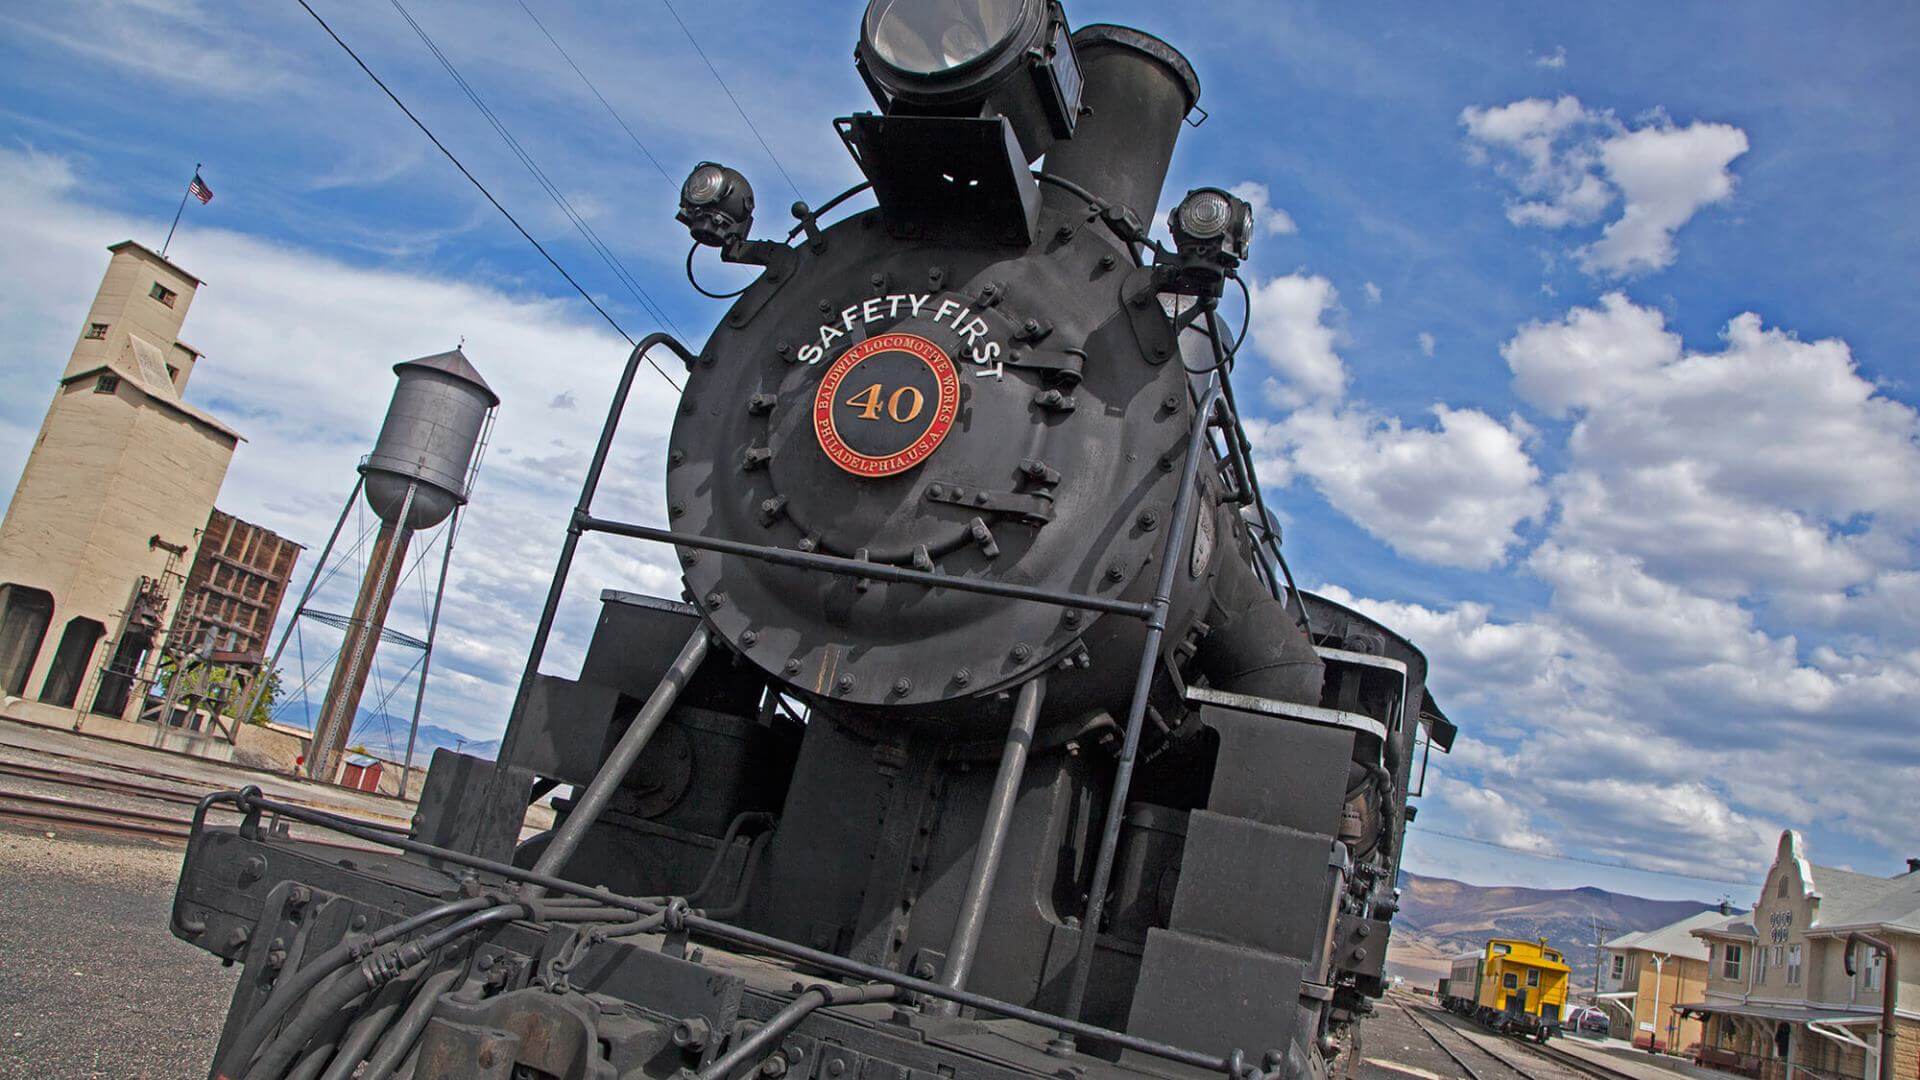 Nevada Northern Railway Museum, Ely NV